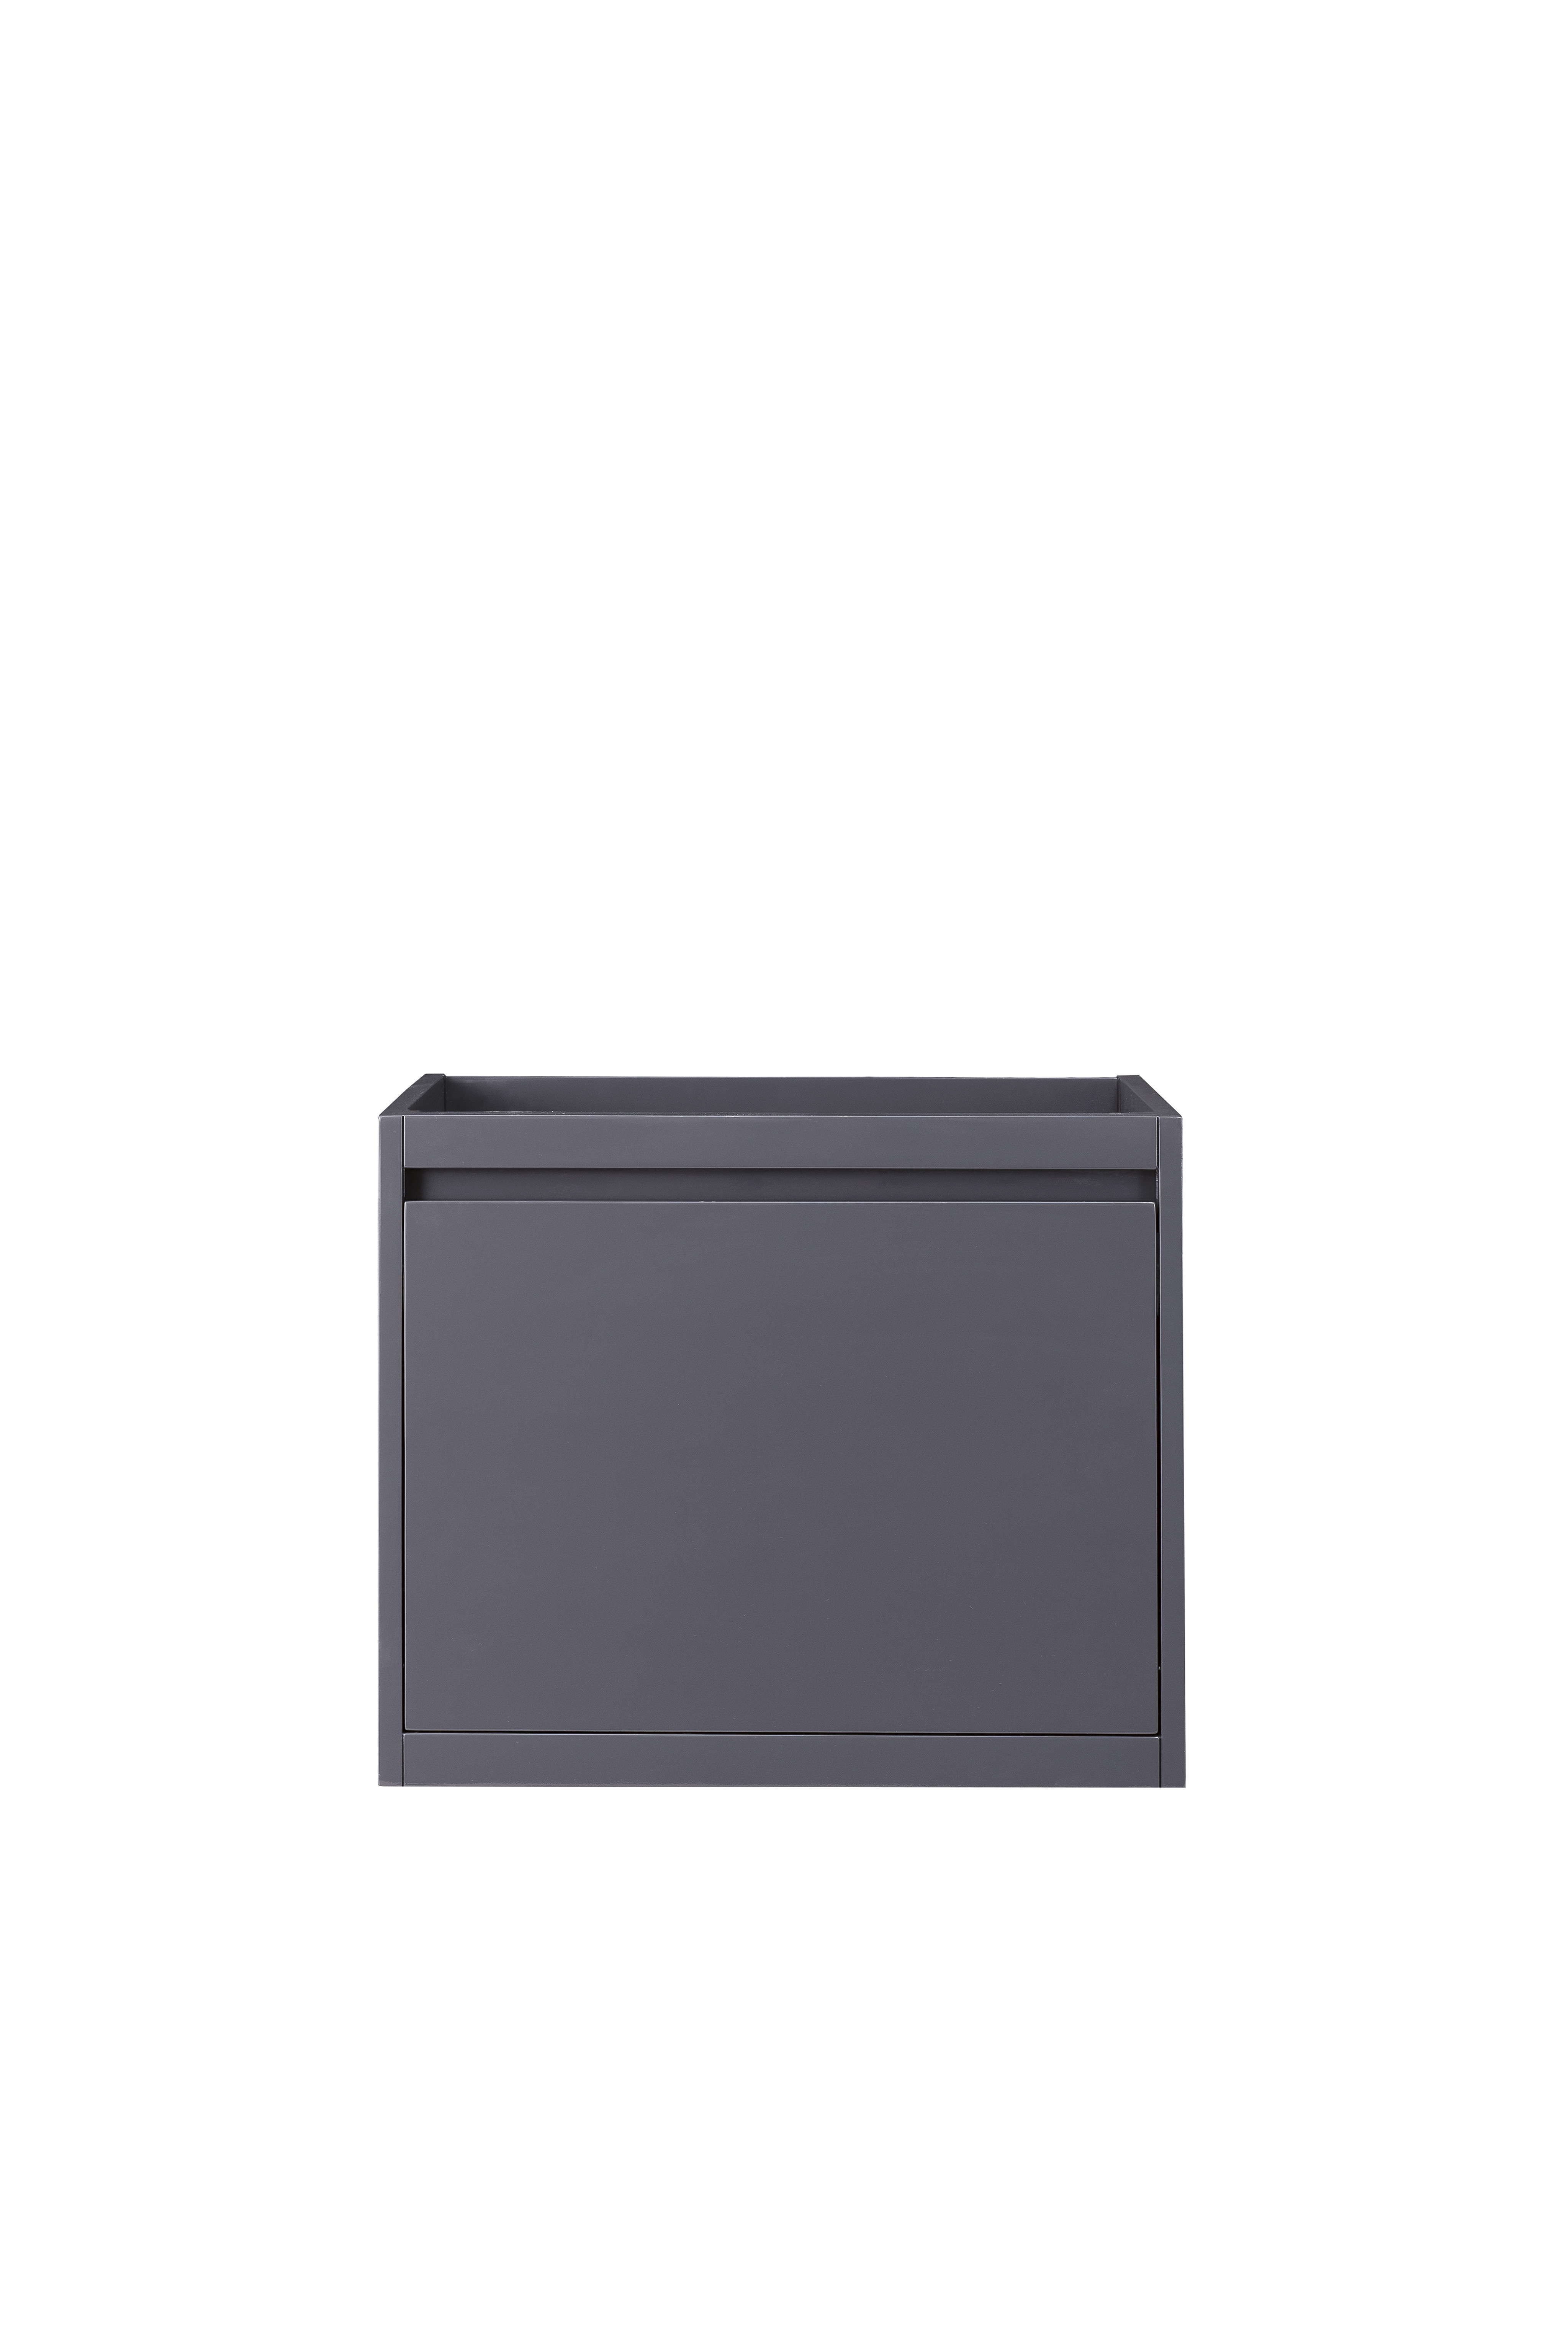 James Martin 801-V23.6-MGG Milan 23.6" Single Vanity Cabinet, Modern Grey Glossy